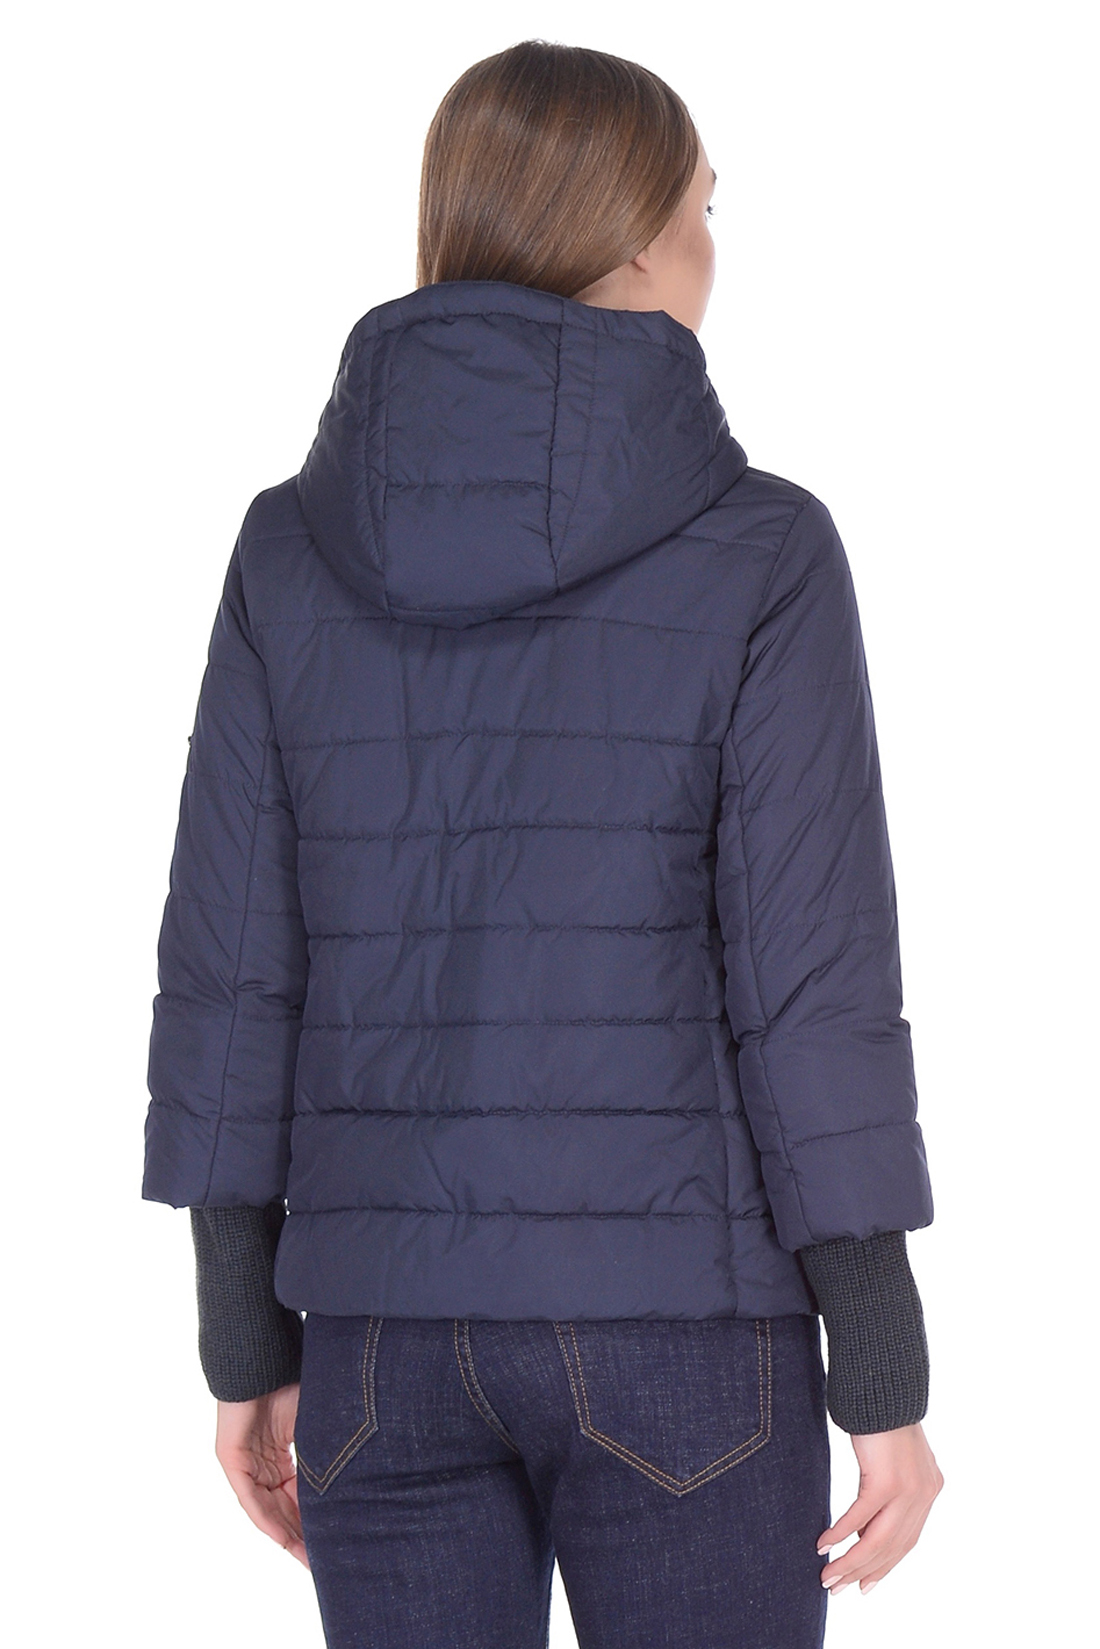 Куртка с вязаными манжетами (арт. baon B038002), размер M, цвет синий Куртка с вязаными манжетами (арт. baon B038002) - фото 2